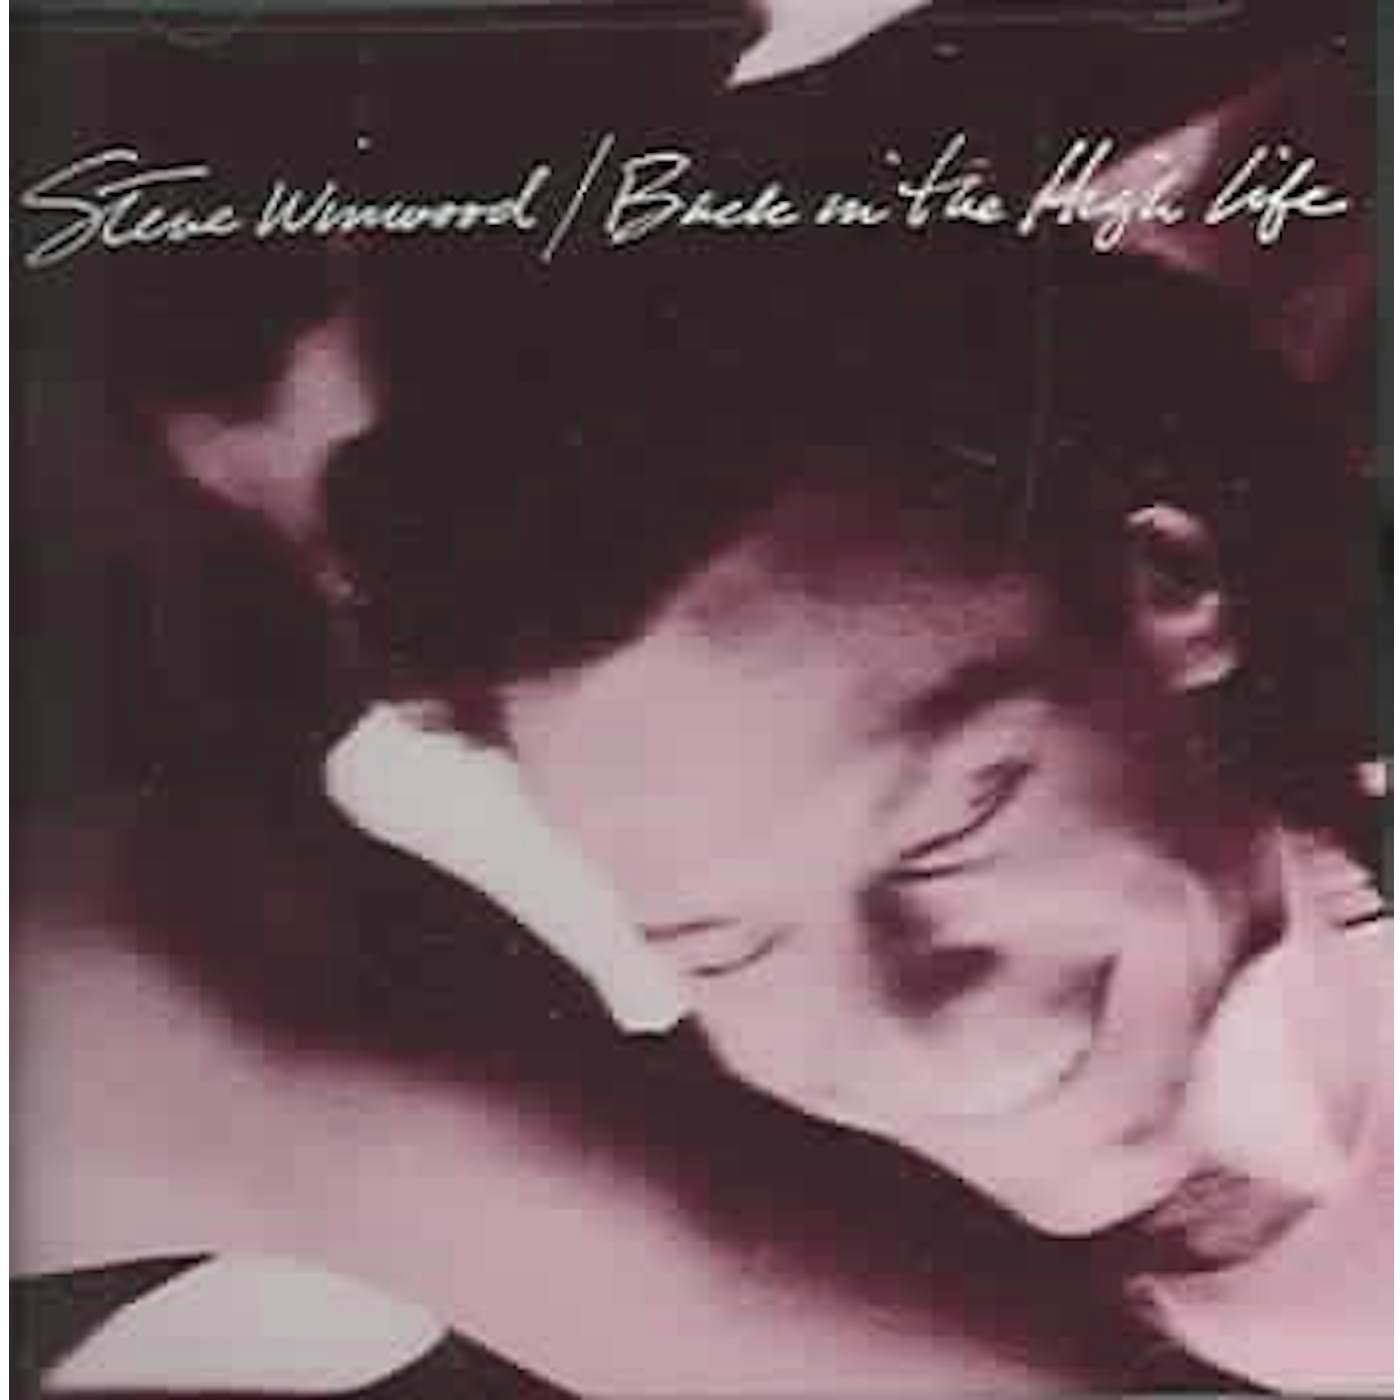 Steve Winwood Back In The High Life CD